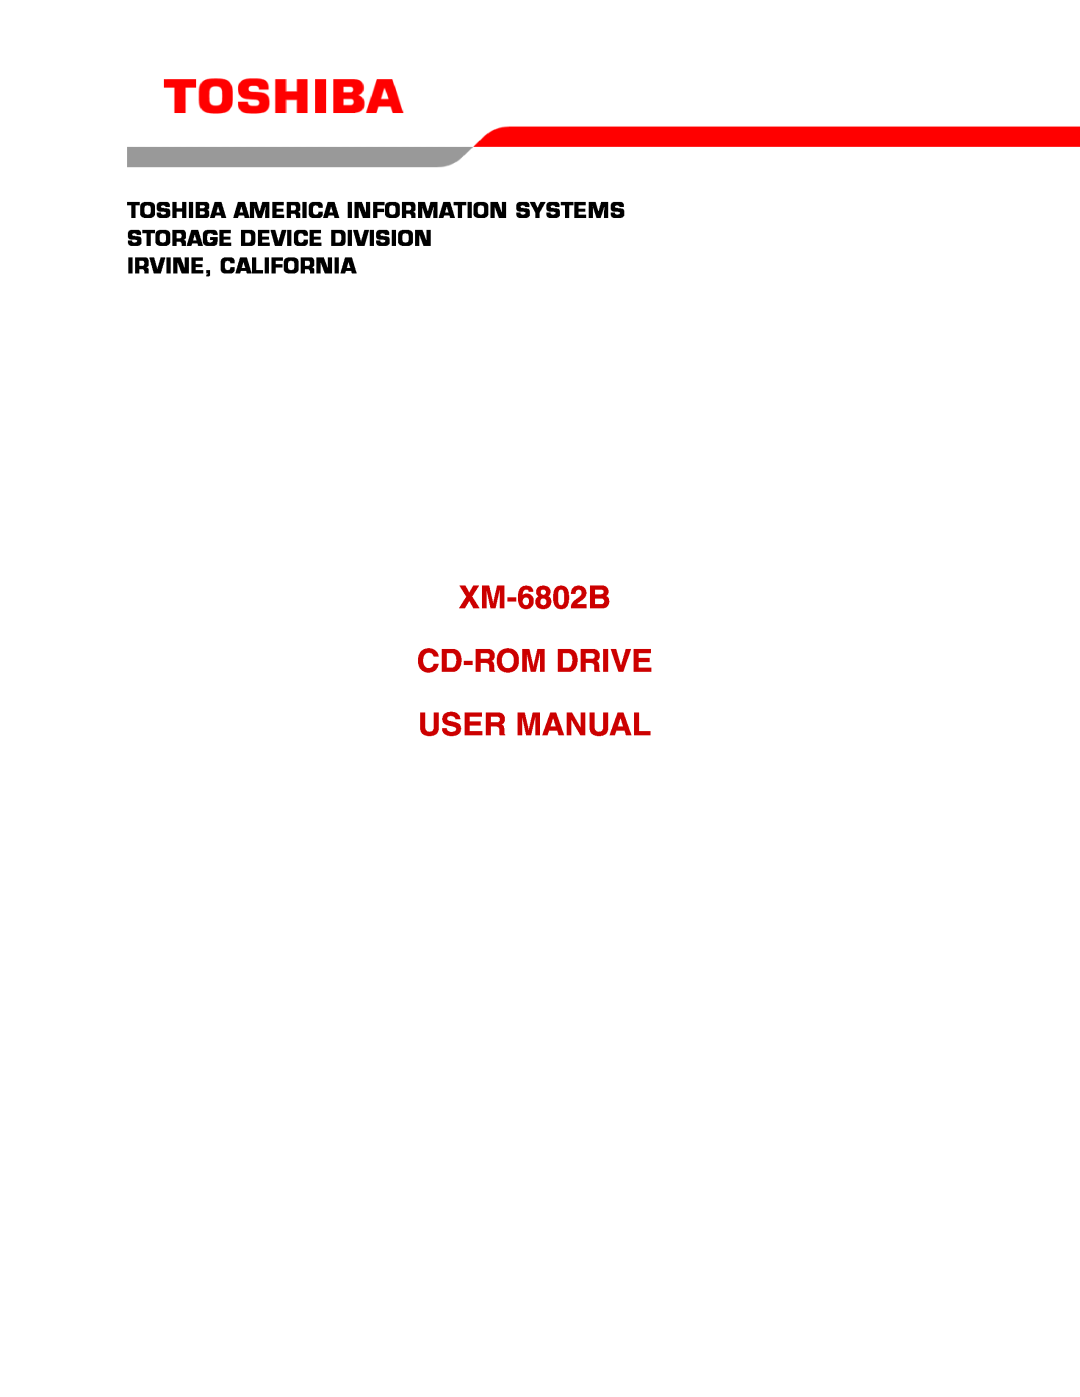 Toshiba user manual XM-6802B CD-ROM DRIVE USER MANUAL, Toshiba America Information Systems Storage Device Division 